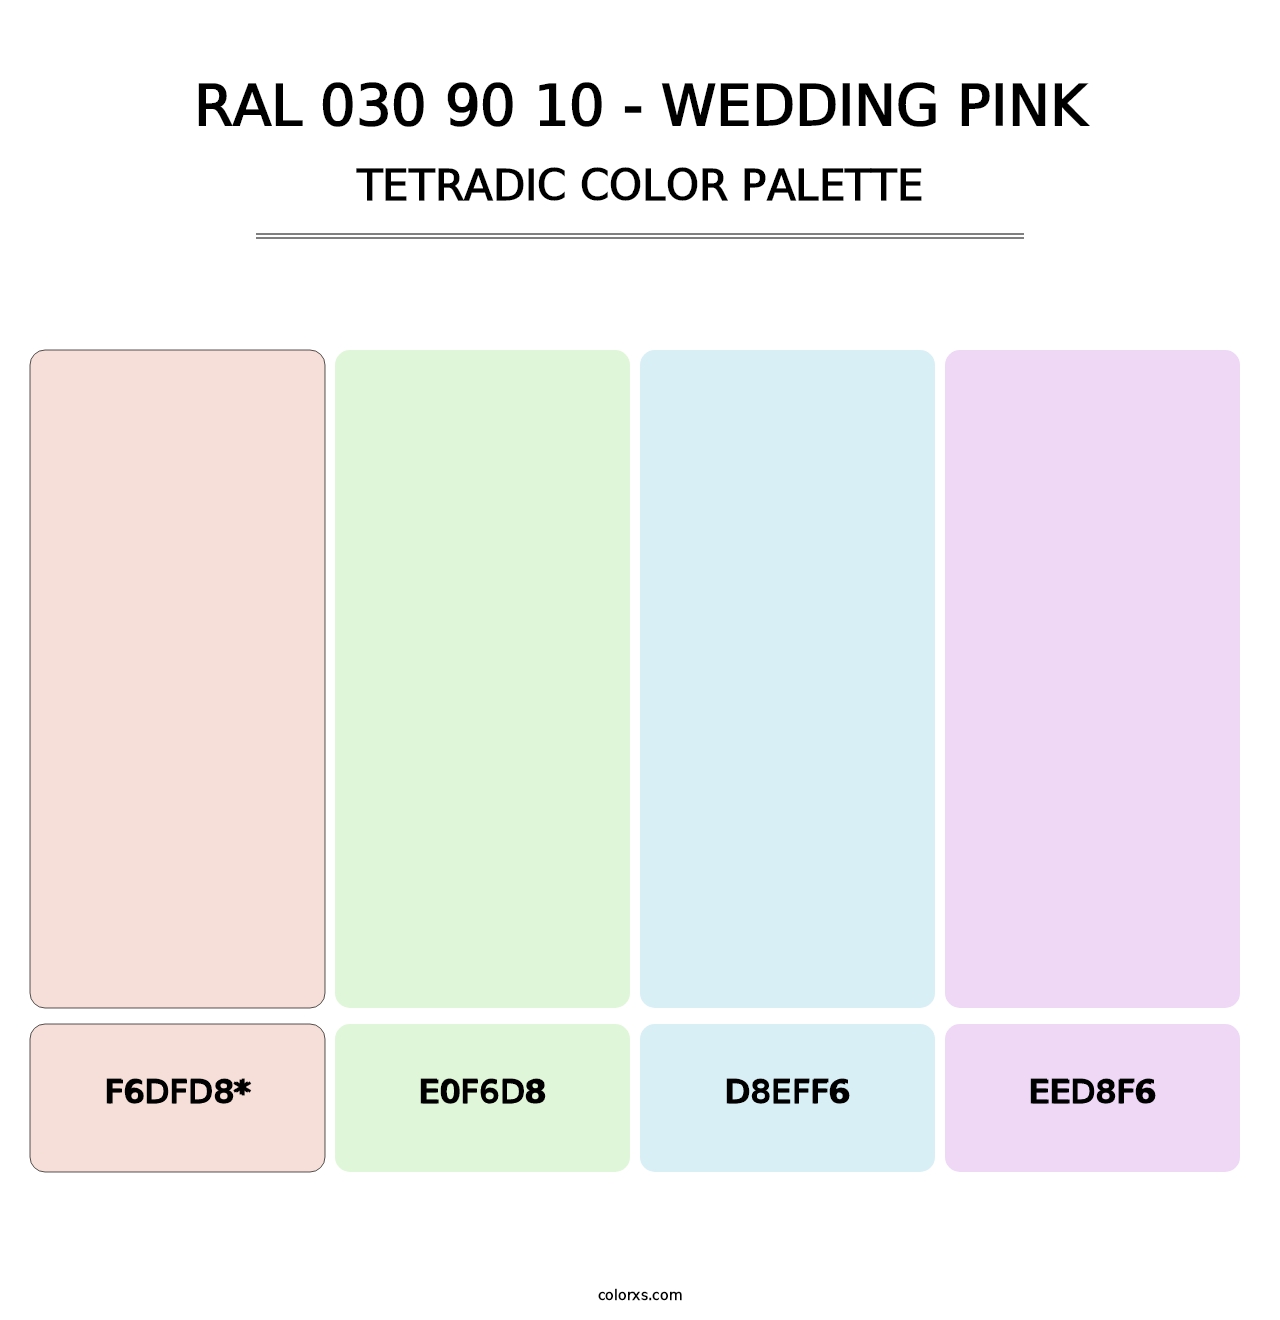 RAL 030 90 10 - Wedding Pink - Tetradic Color Palette